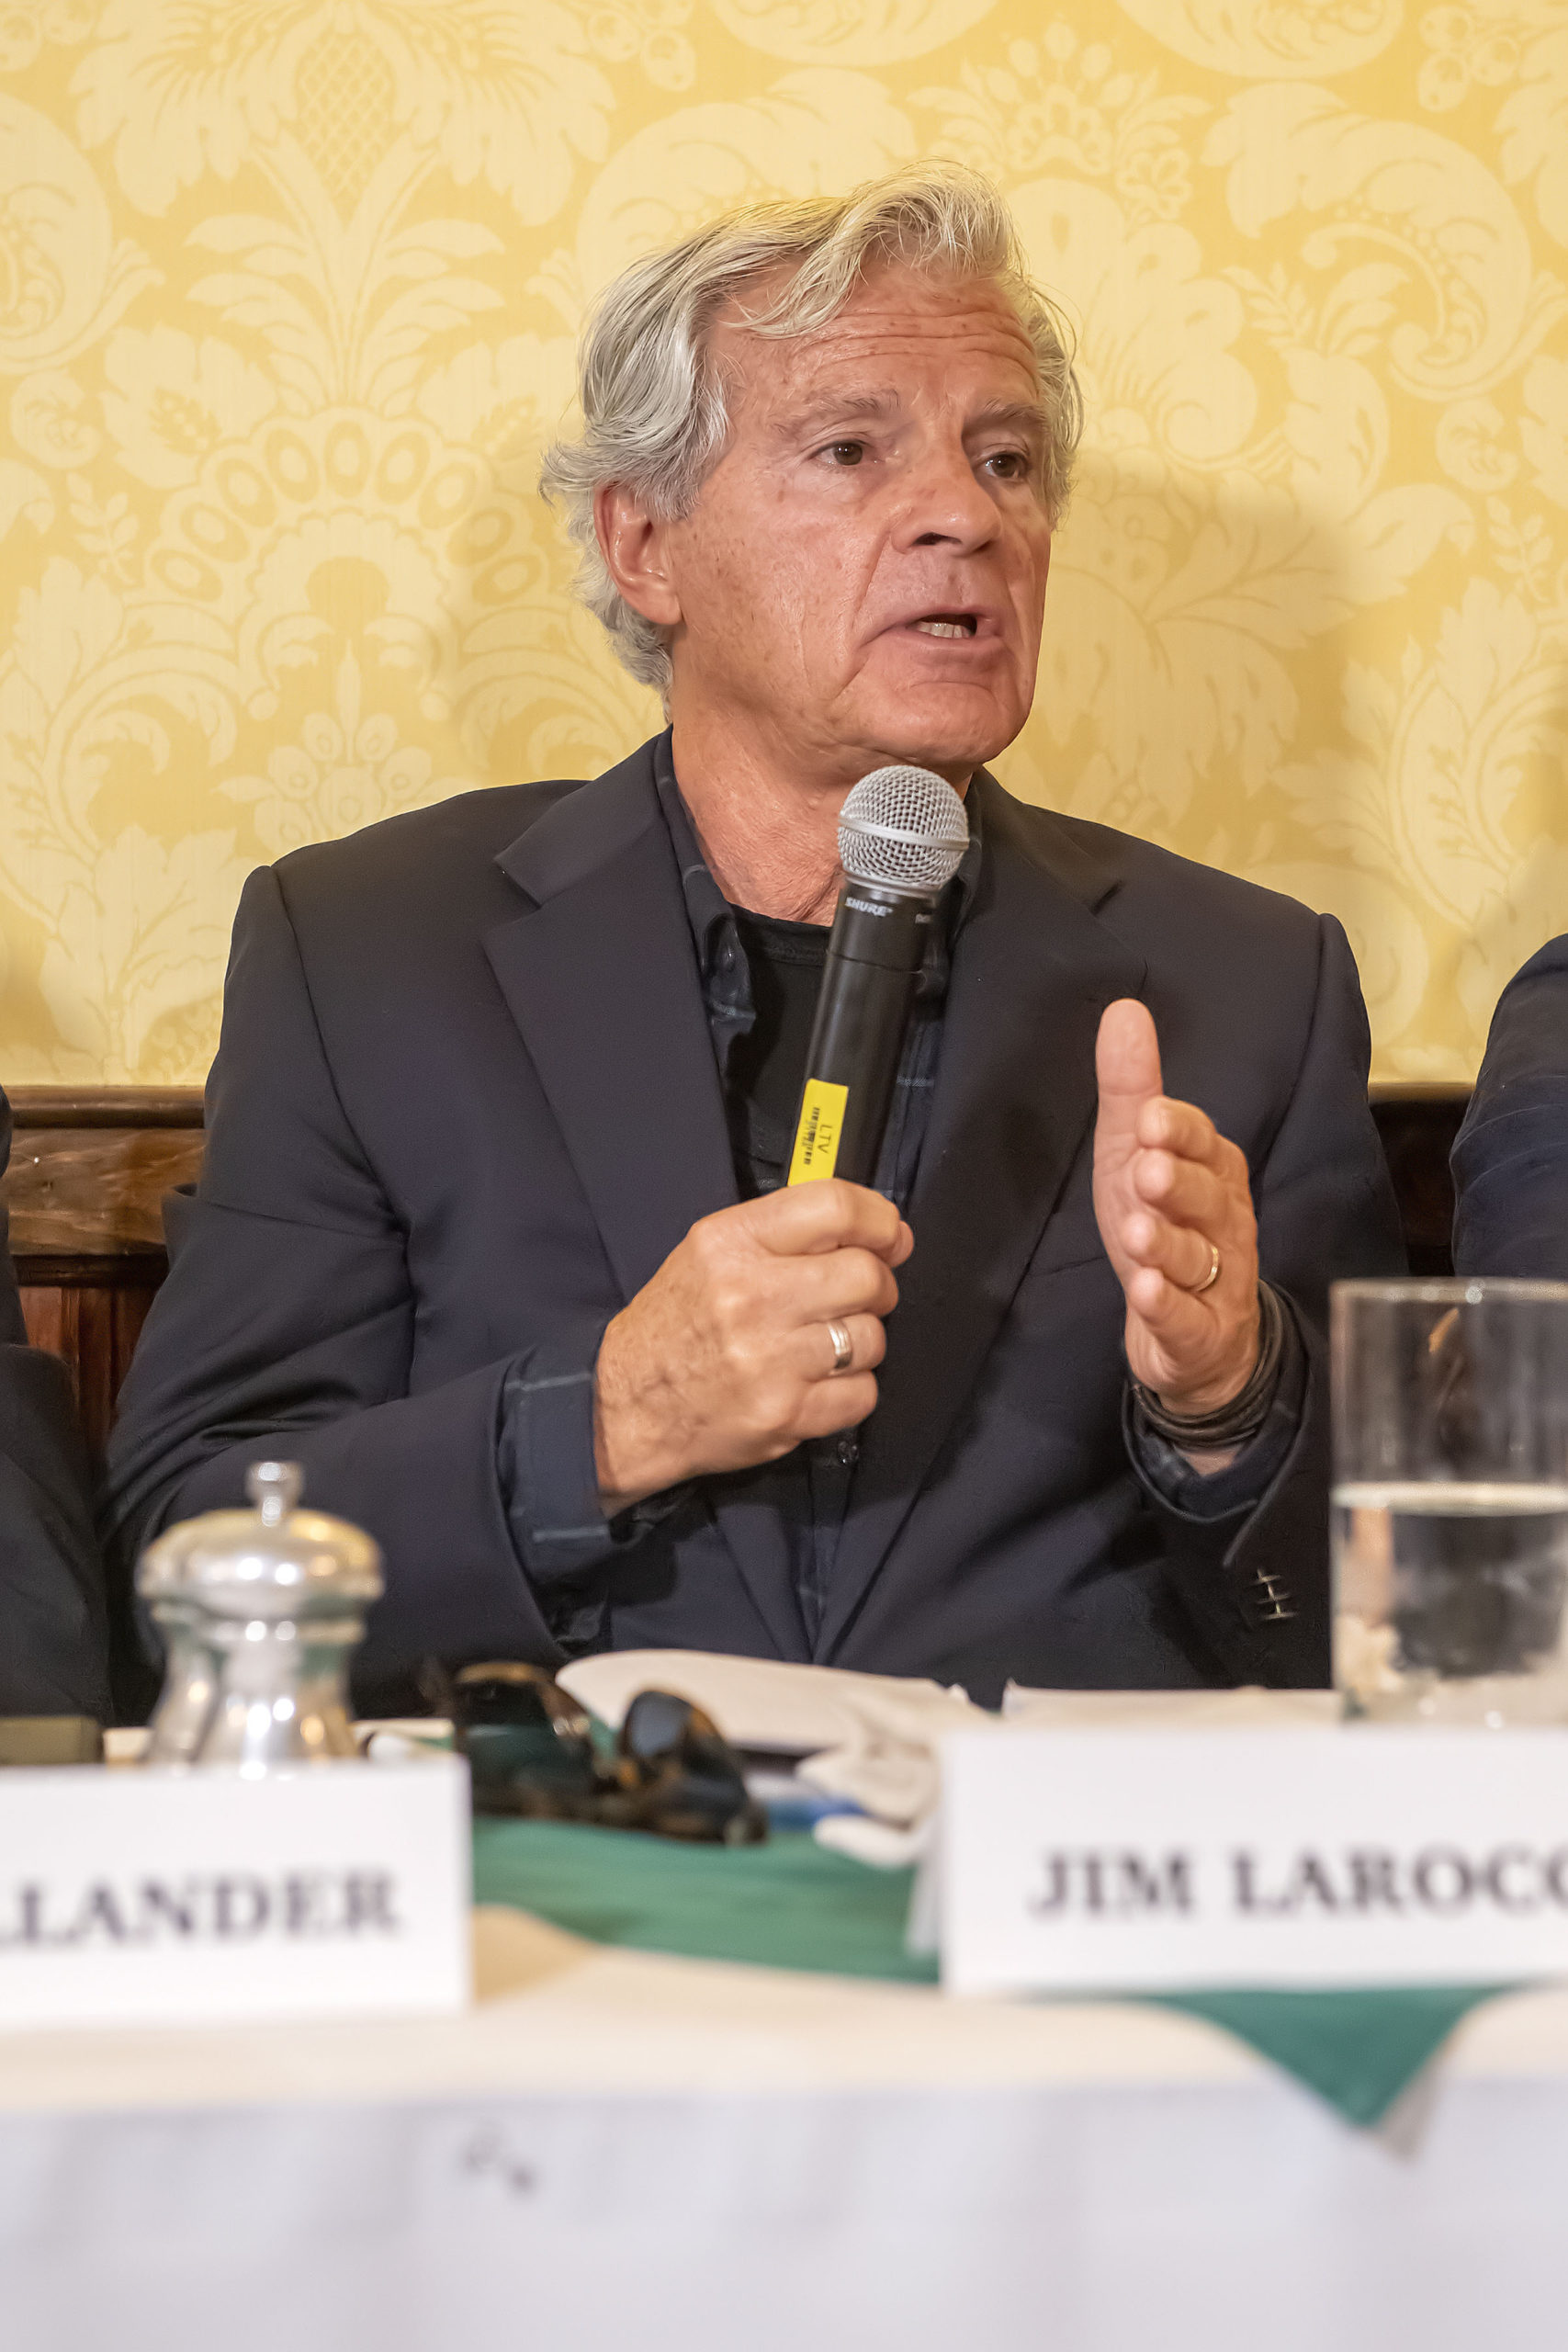 Trustee James Larocca